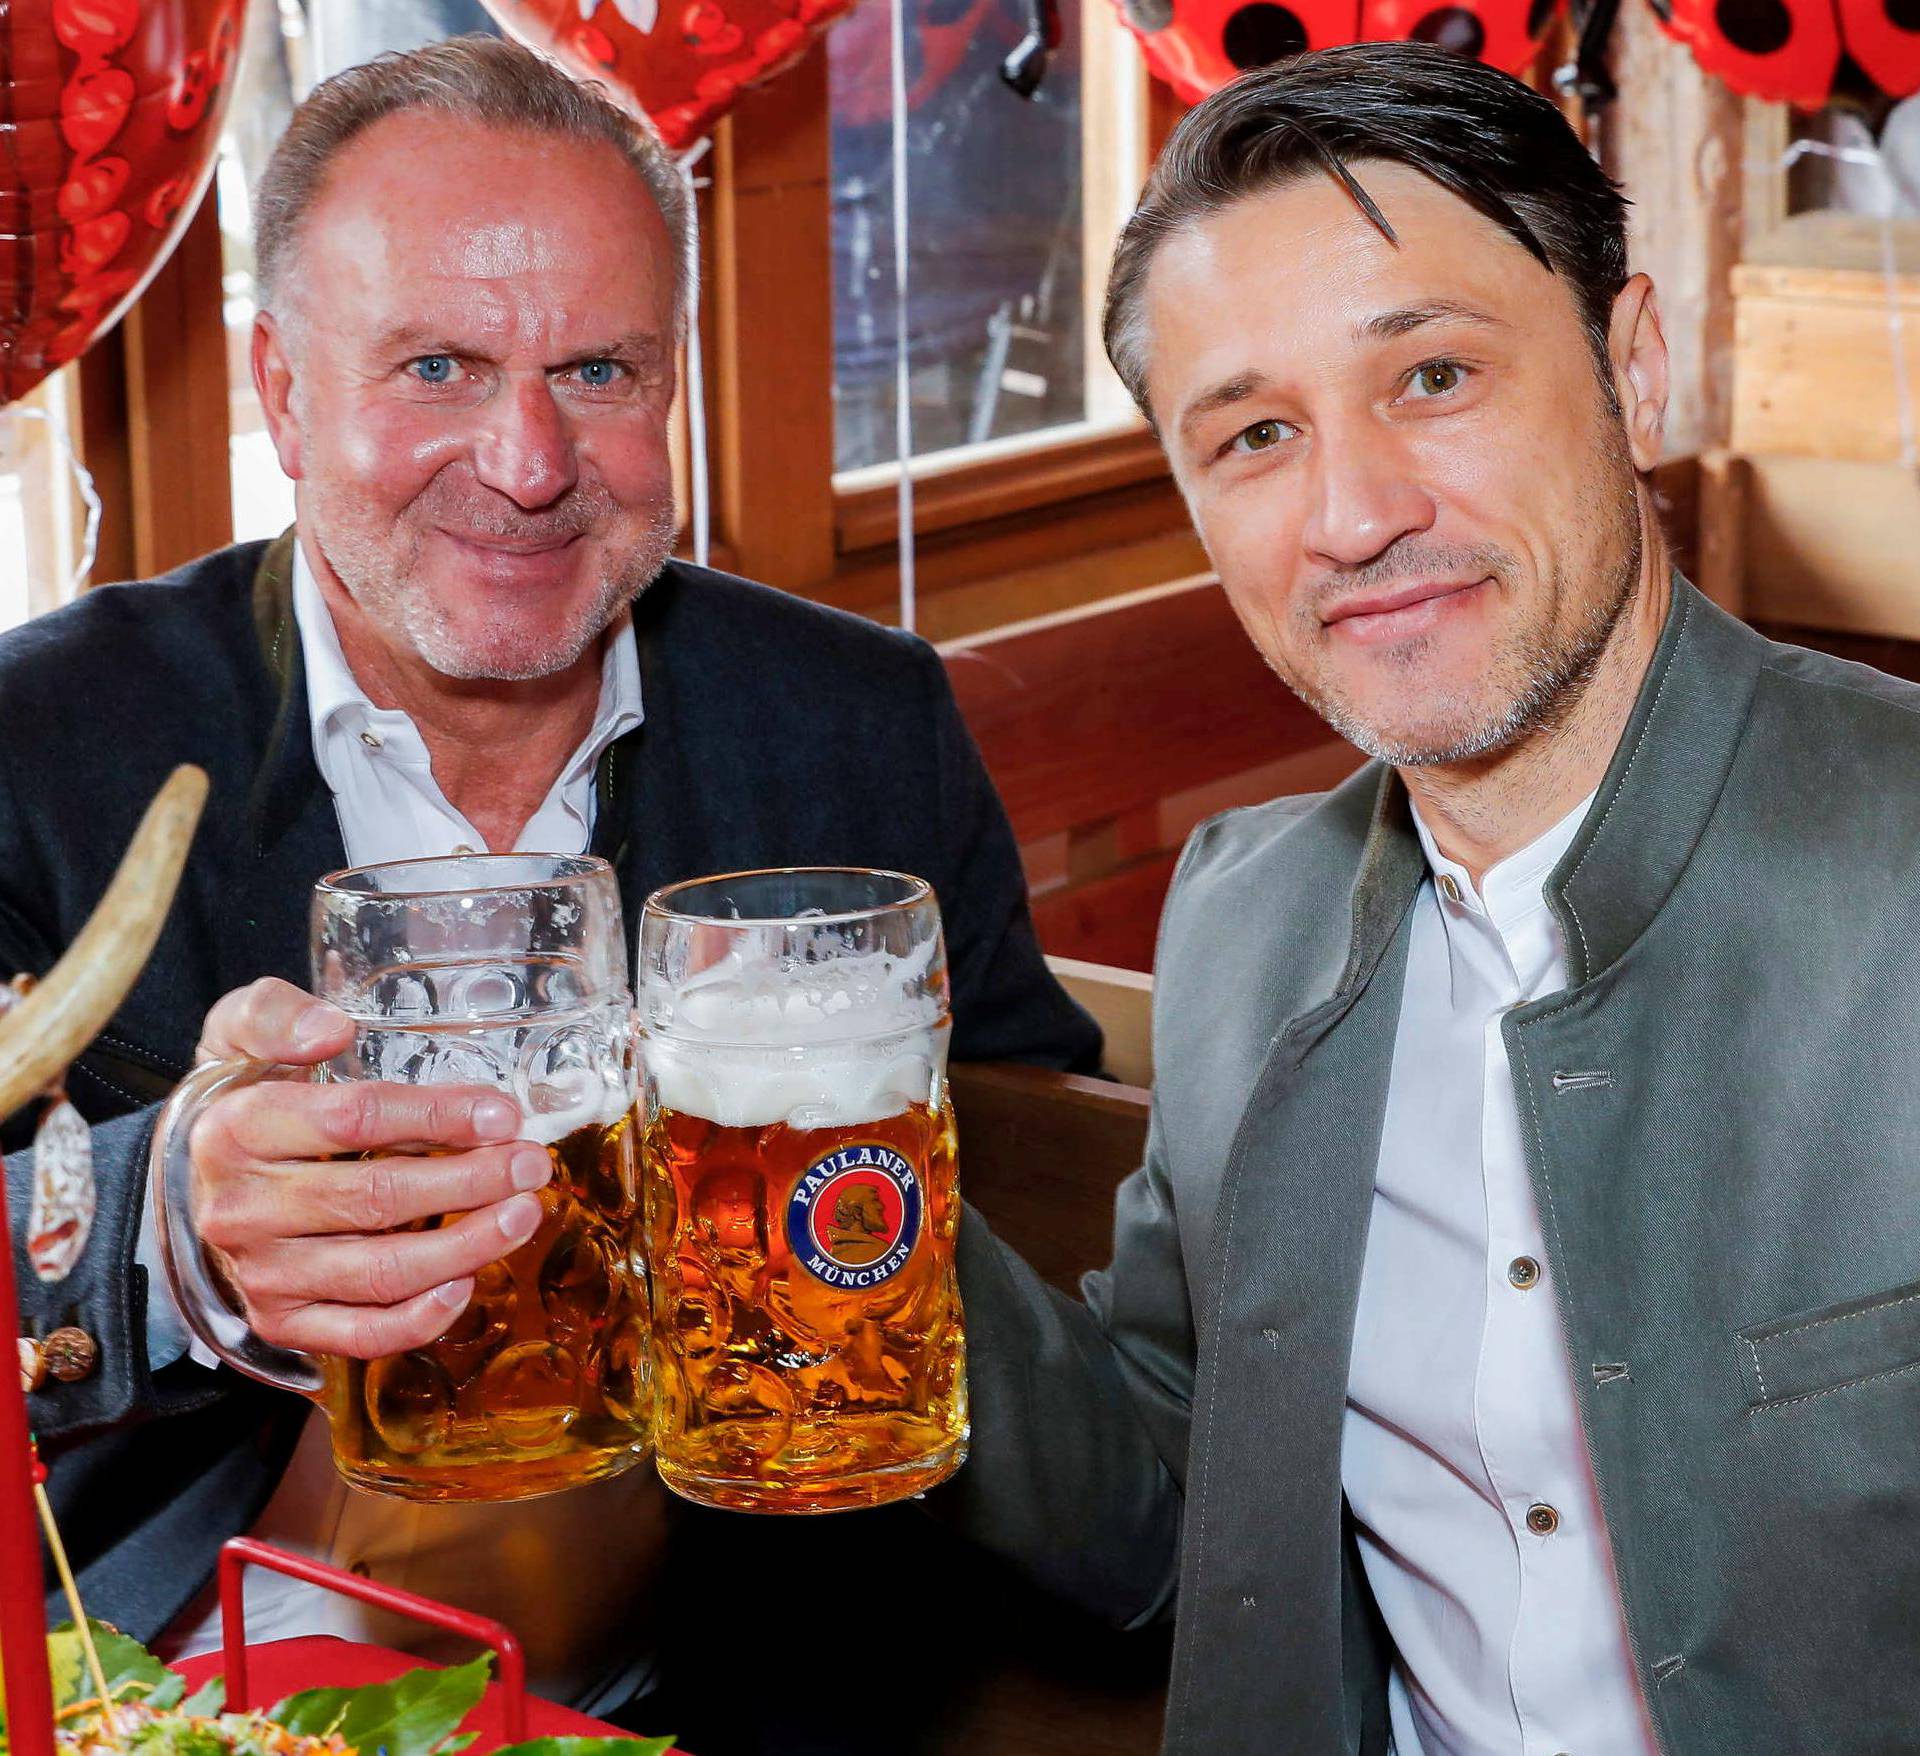 FC Bayern Munich's coach Niko Kovac and CEO Karl-Heinz Rummenigge pose during a visit at the Oktoberfest in Munich